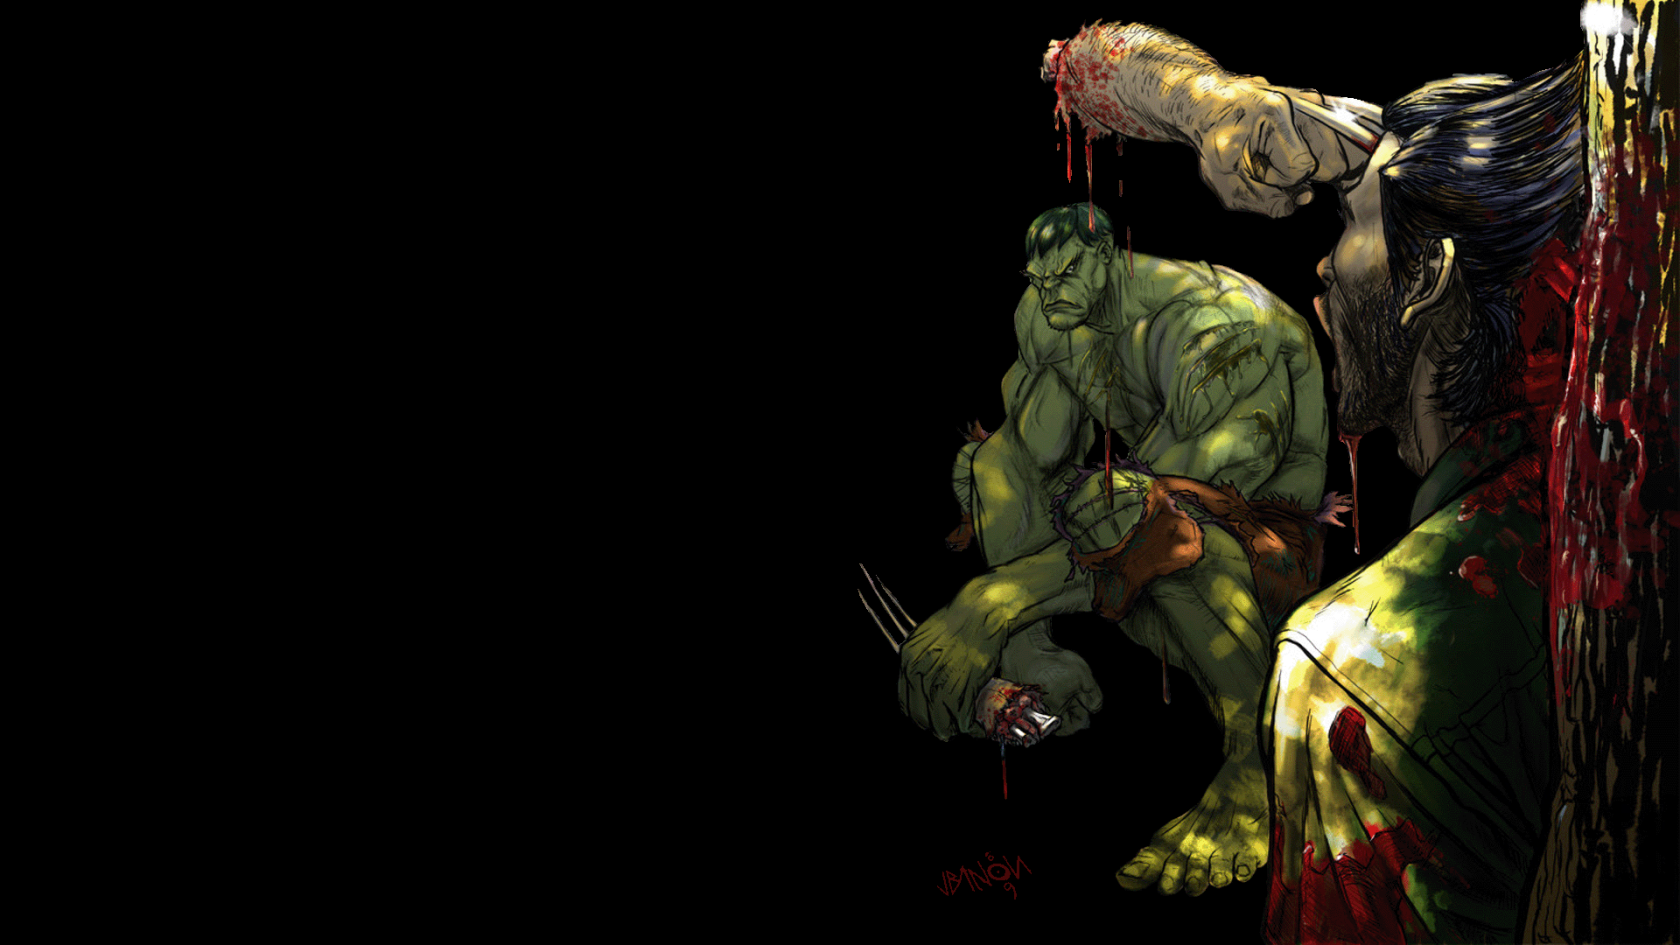 Hulk Vs Wolverine Wallpaper Pictures